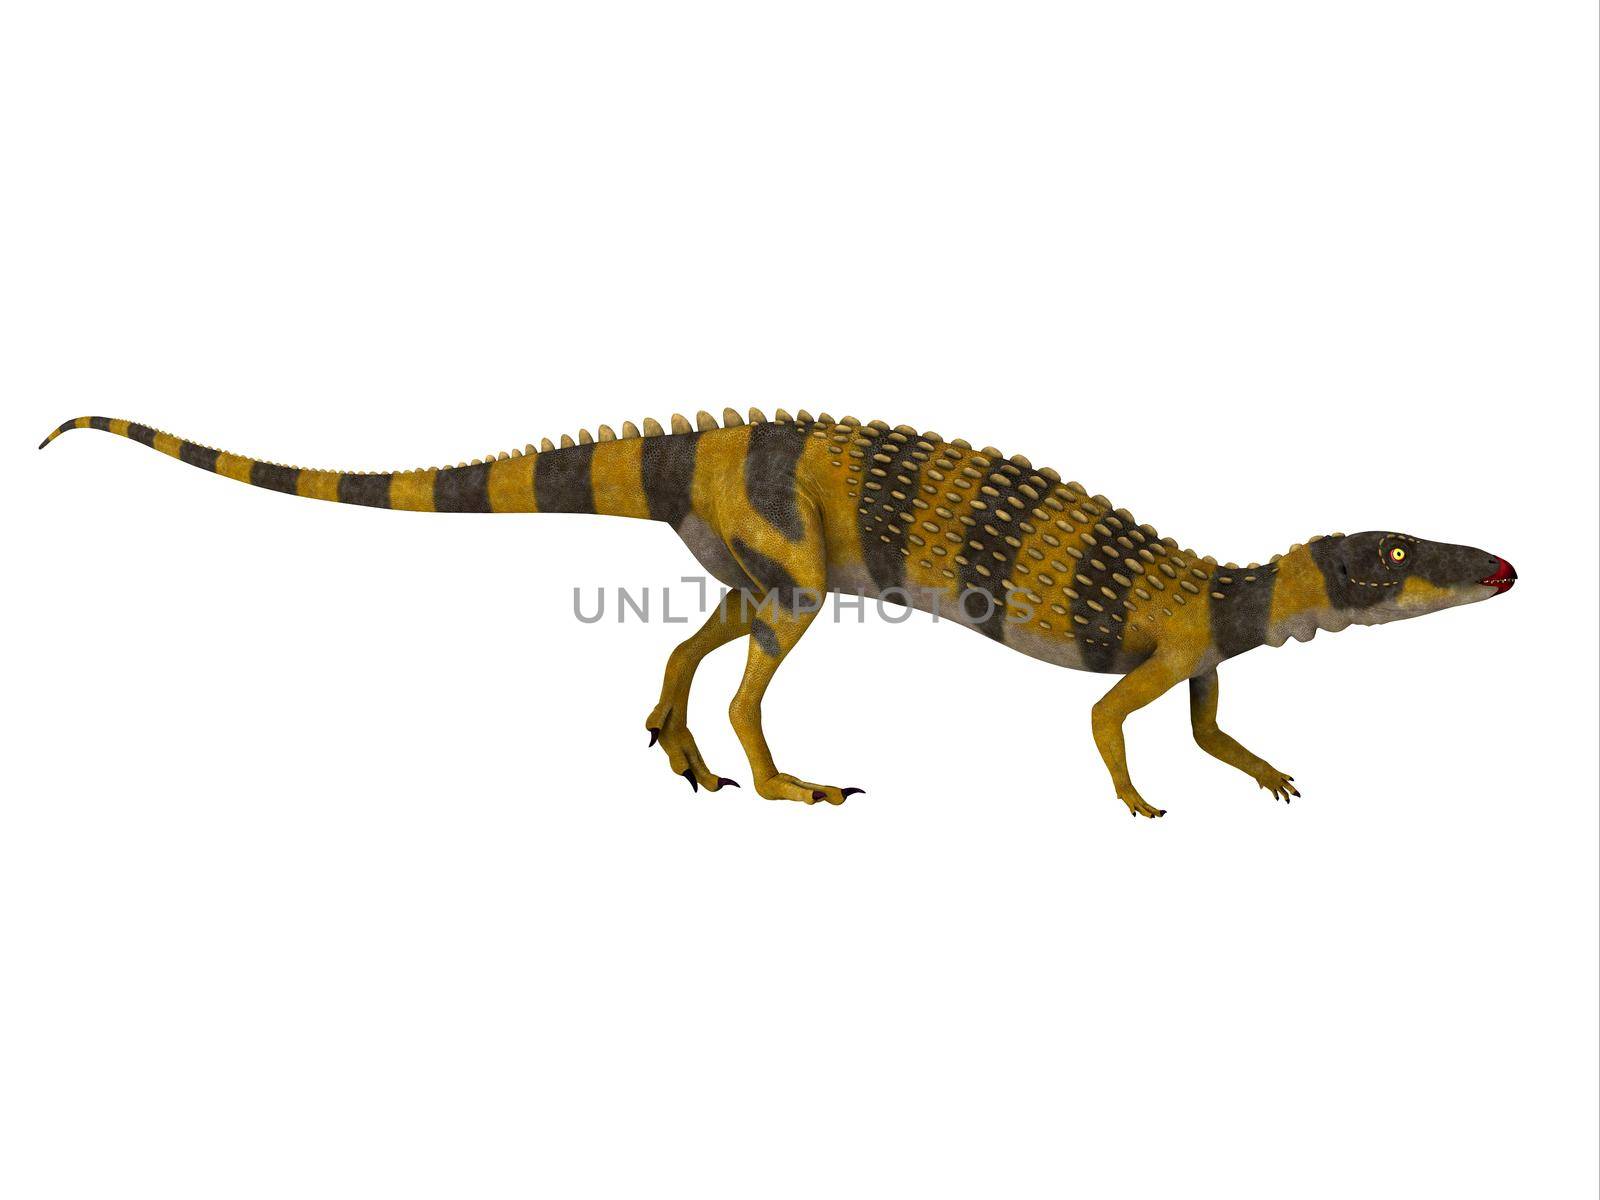 Scutellosaurus was an armored herbivorous dinosaur that lived in Arizona, USA during the Jurassic Period.